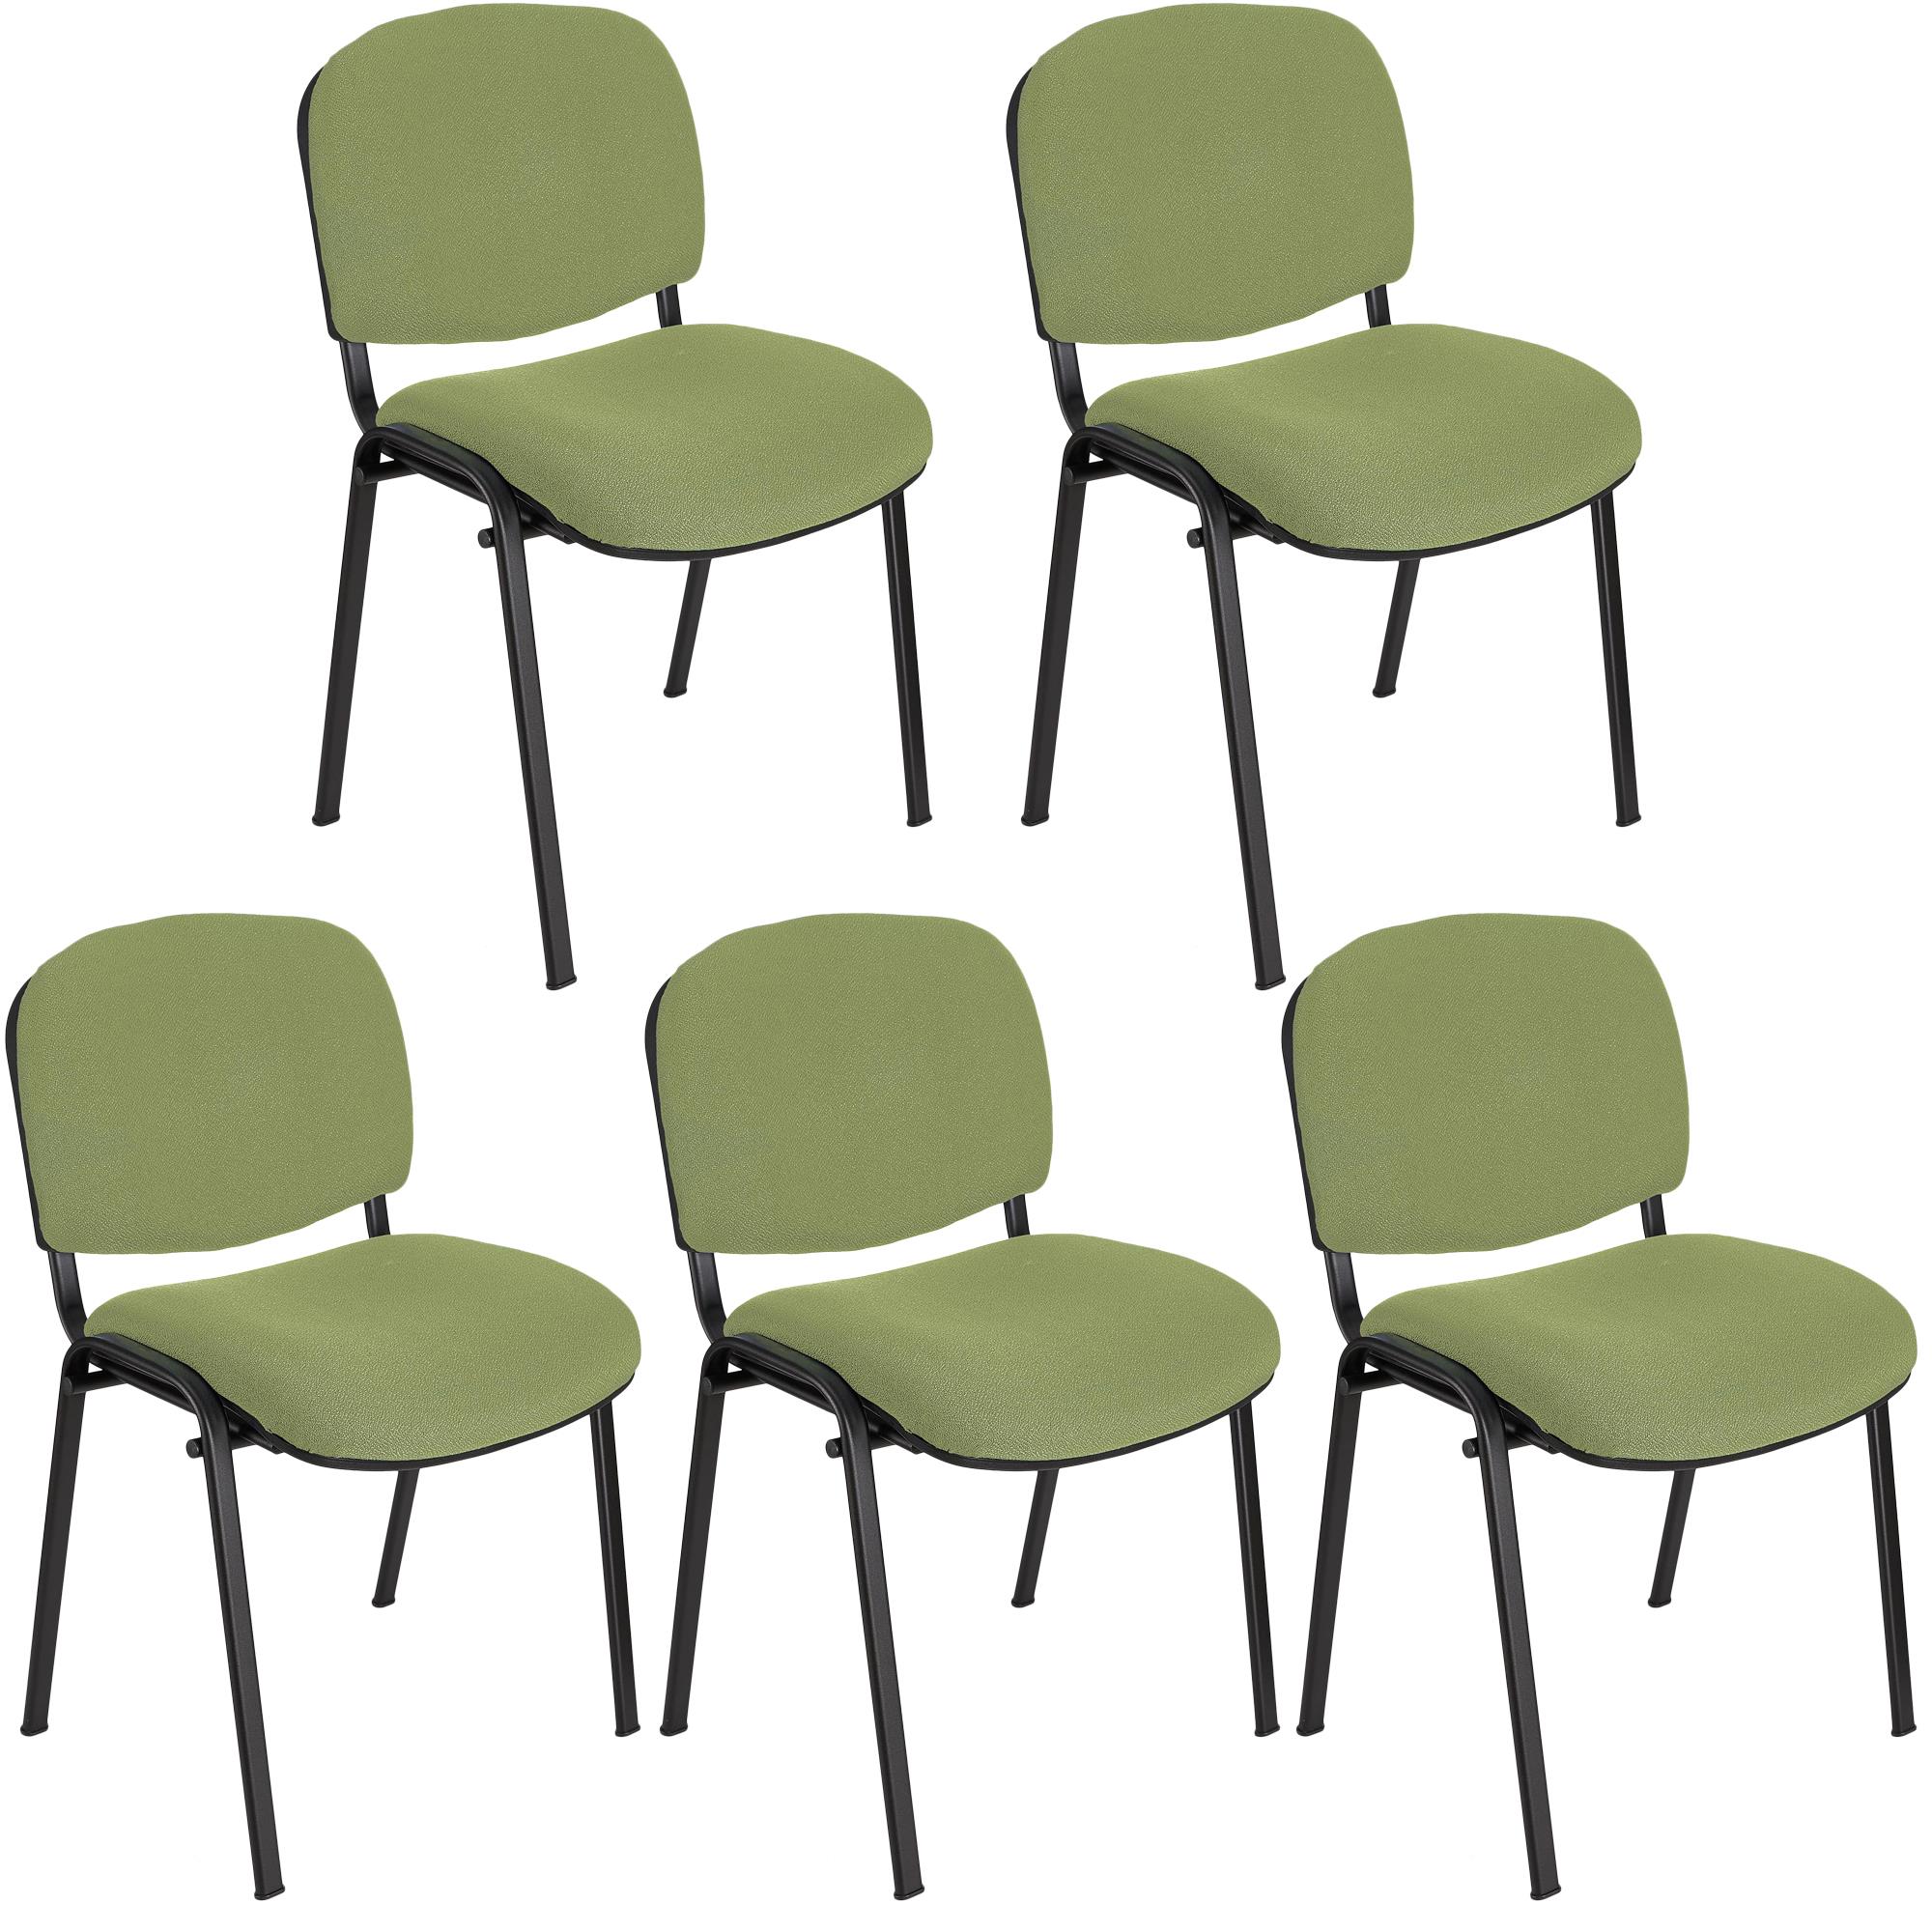 Lote 5 Cadeiras de Visita MOBY BASE, Confortável e Prática, Pernas Pretas, Cor Verde